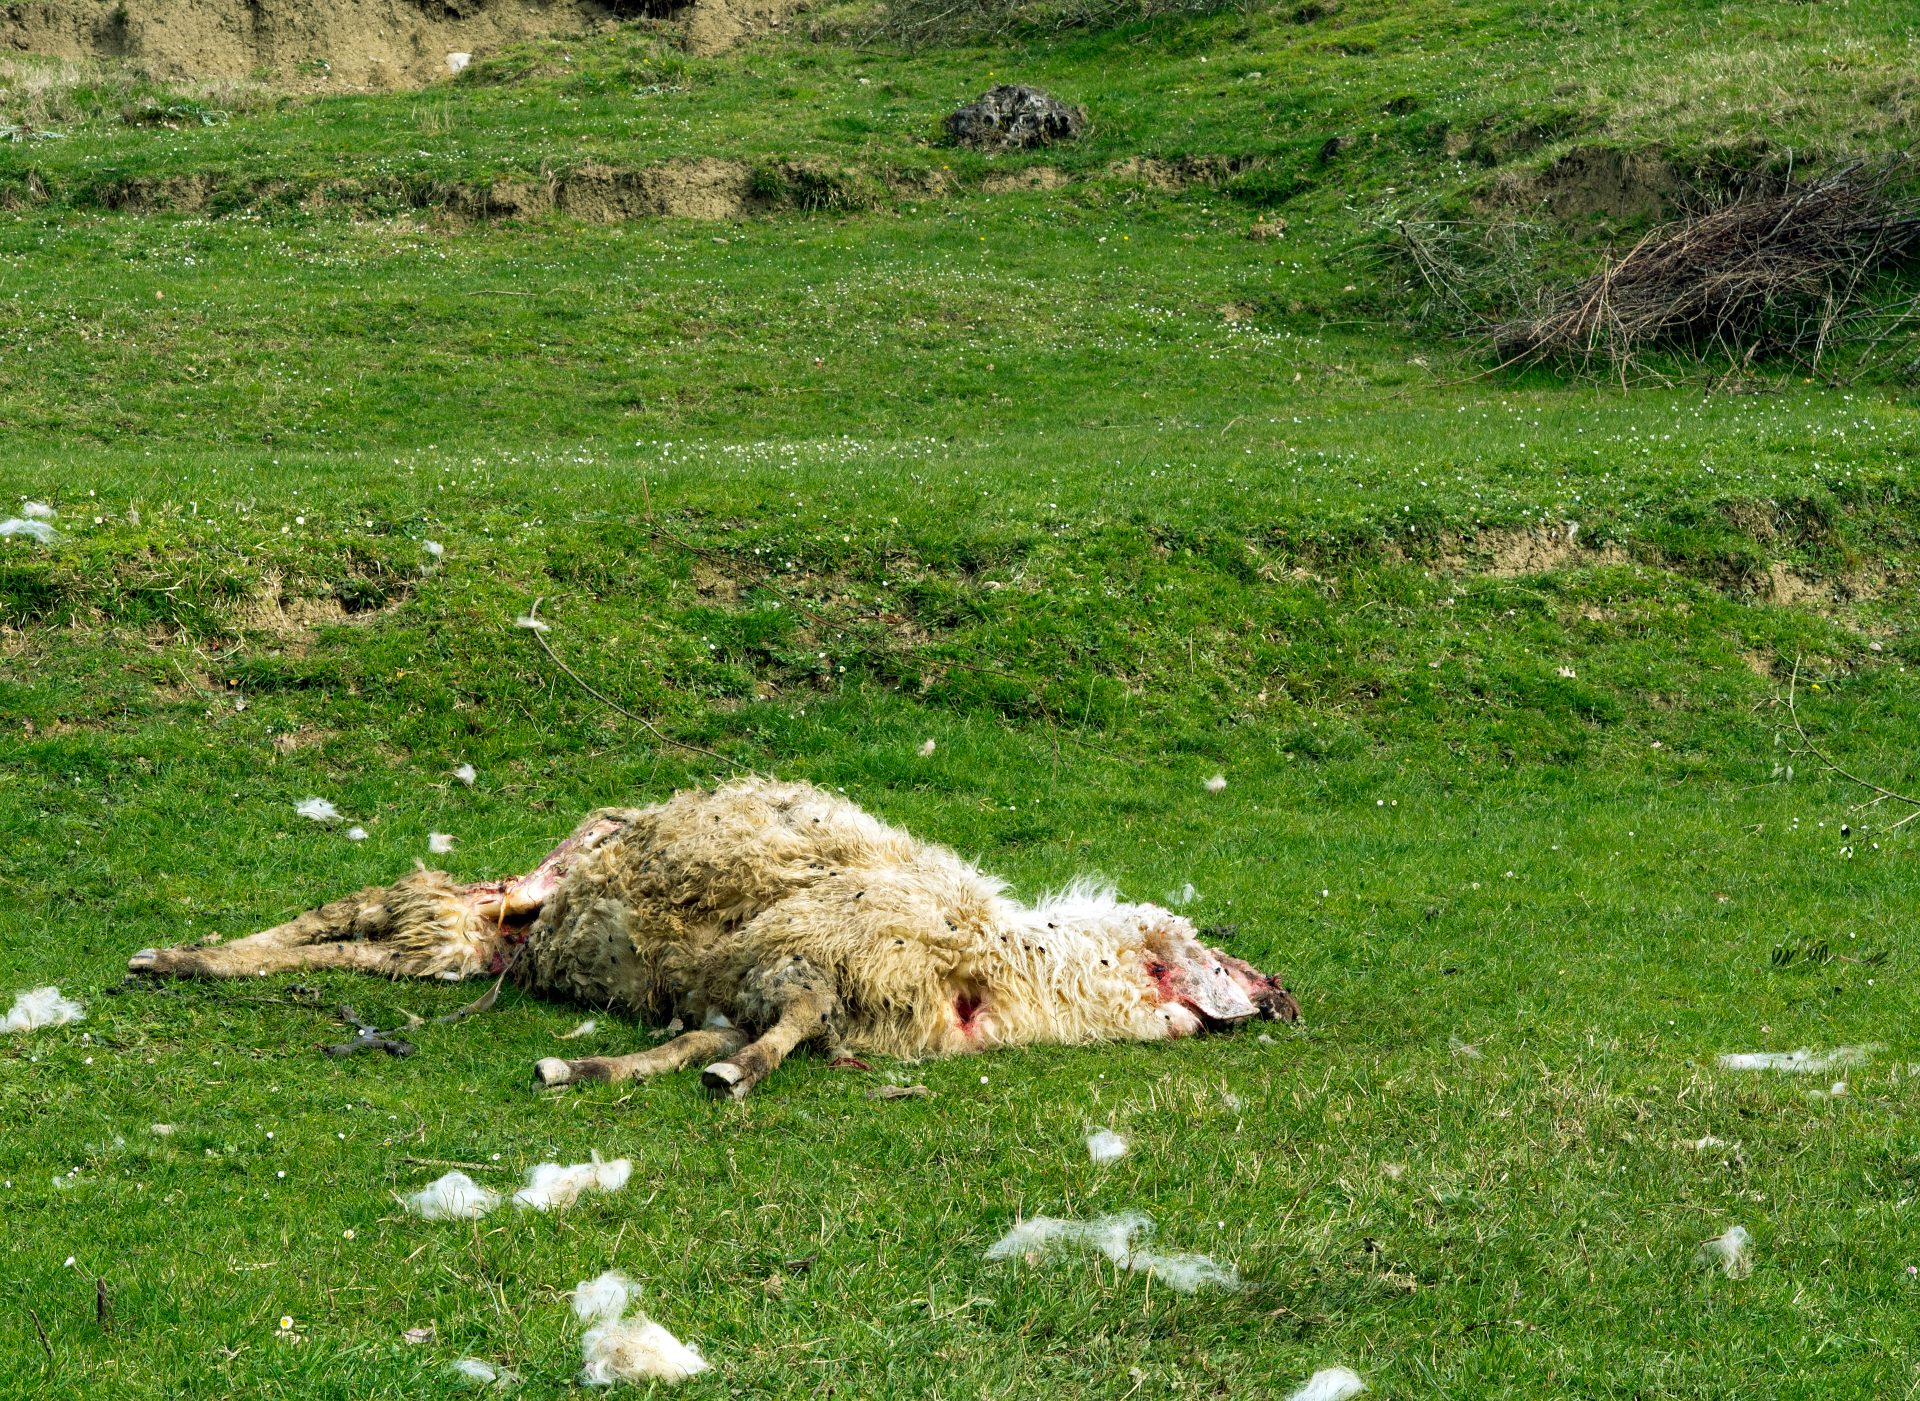 Tote Schafe als Protest